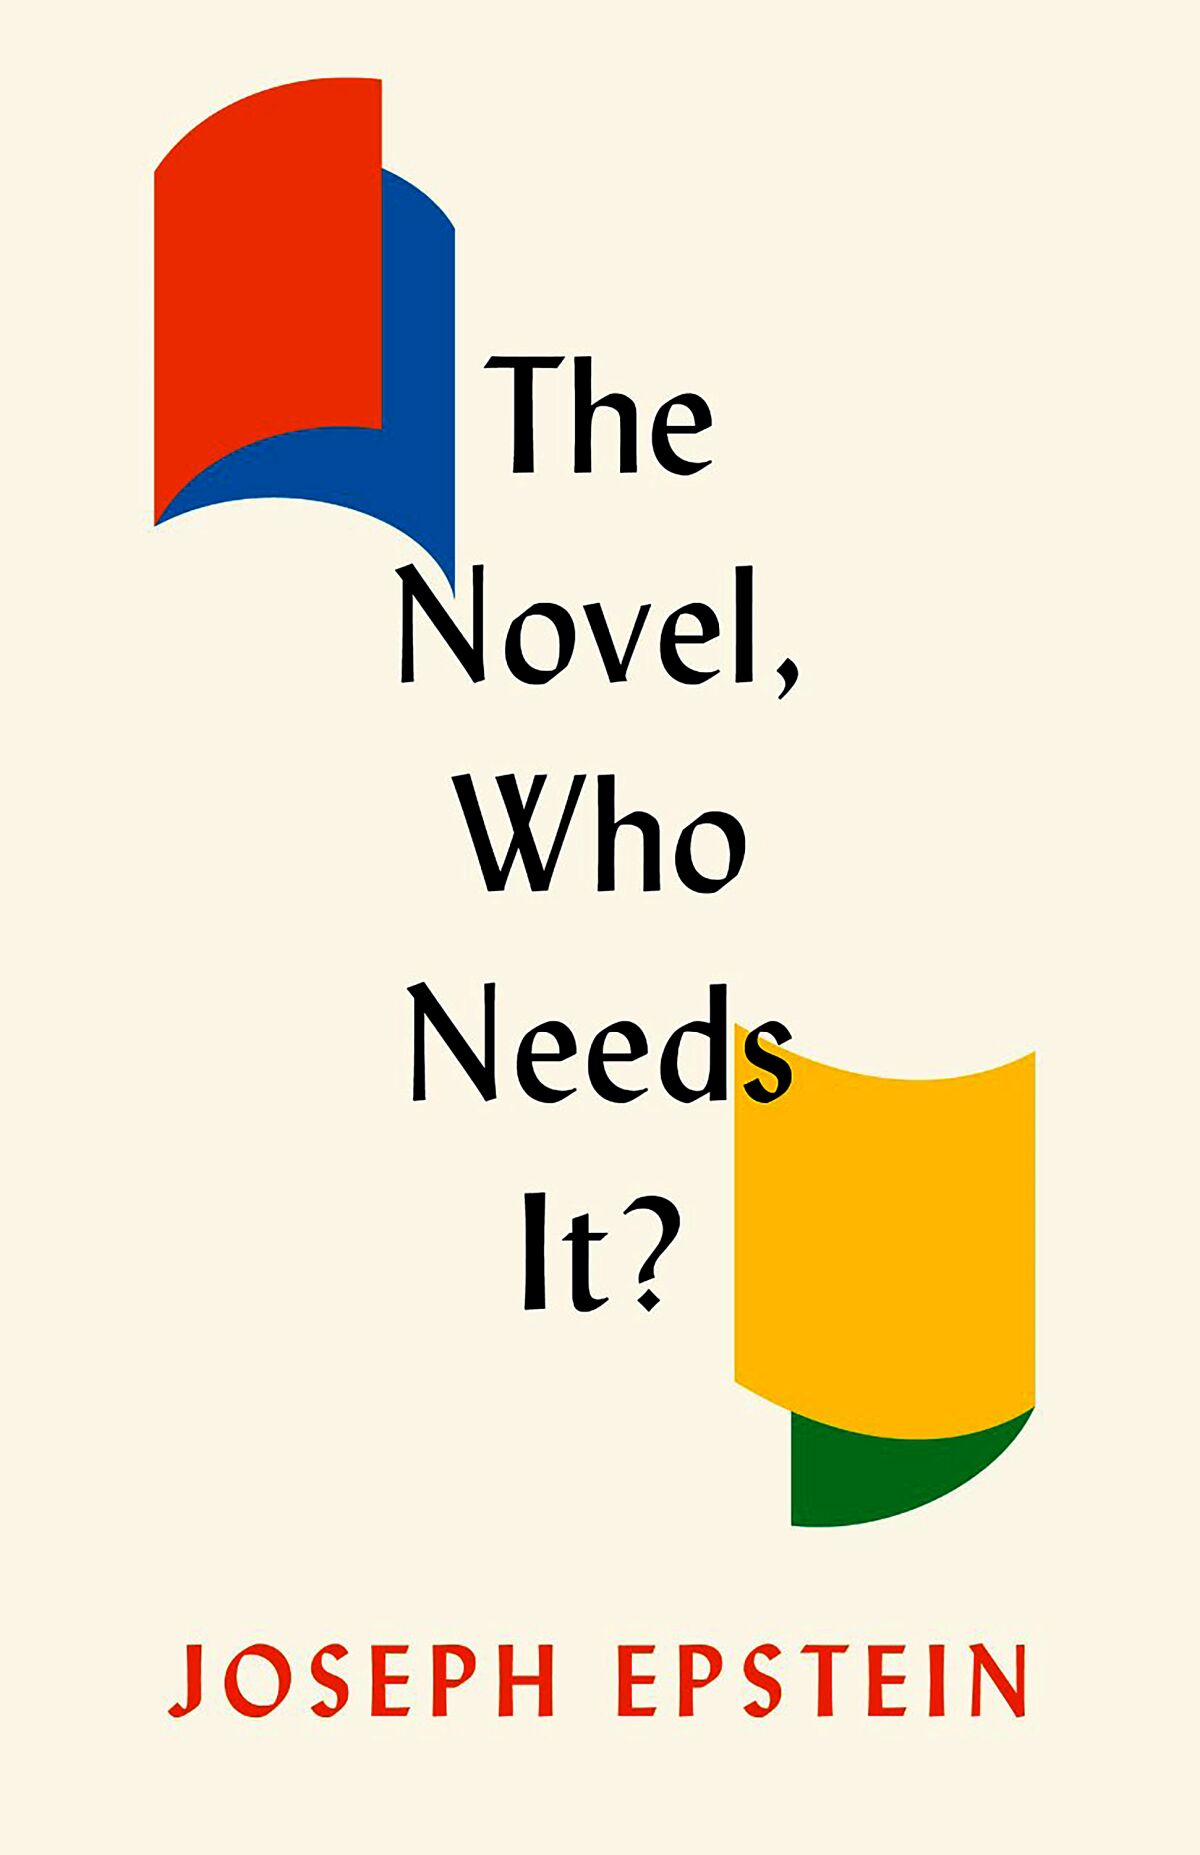 "The Novel, Who Needs It?" by Joseph Epstein